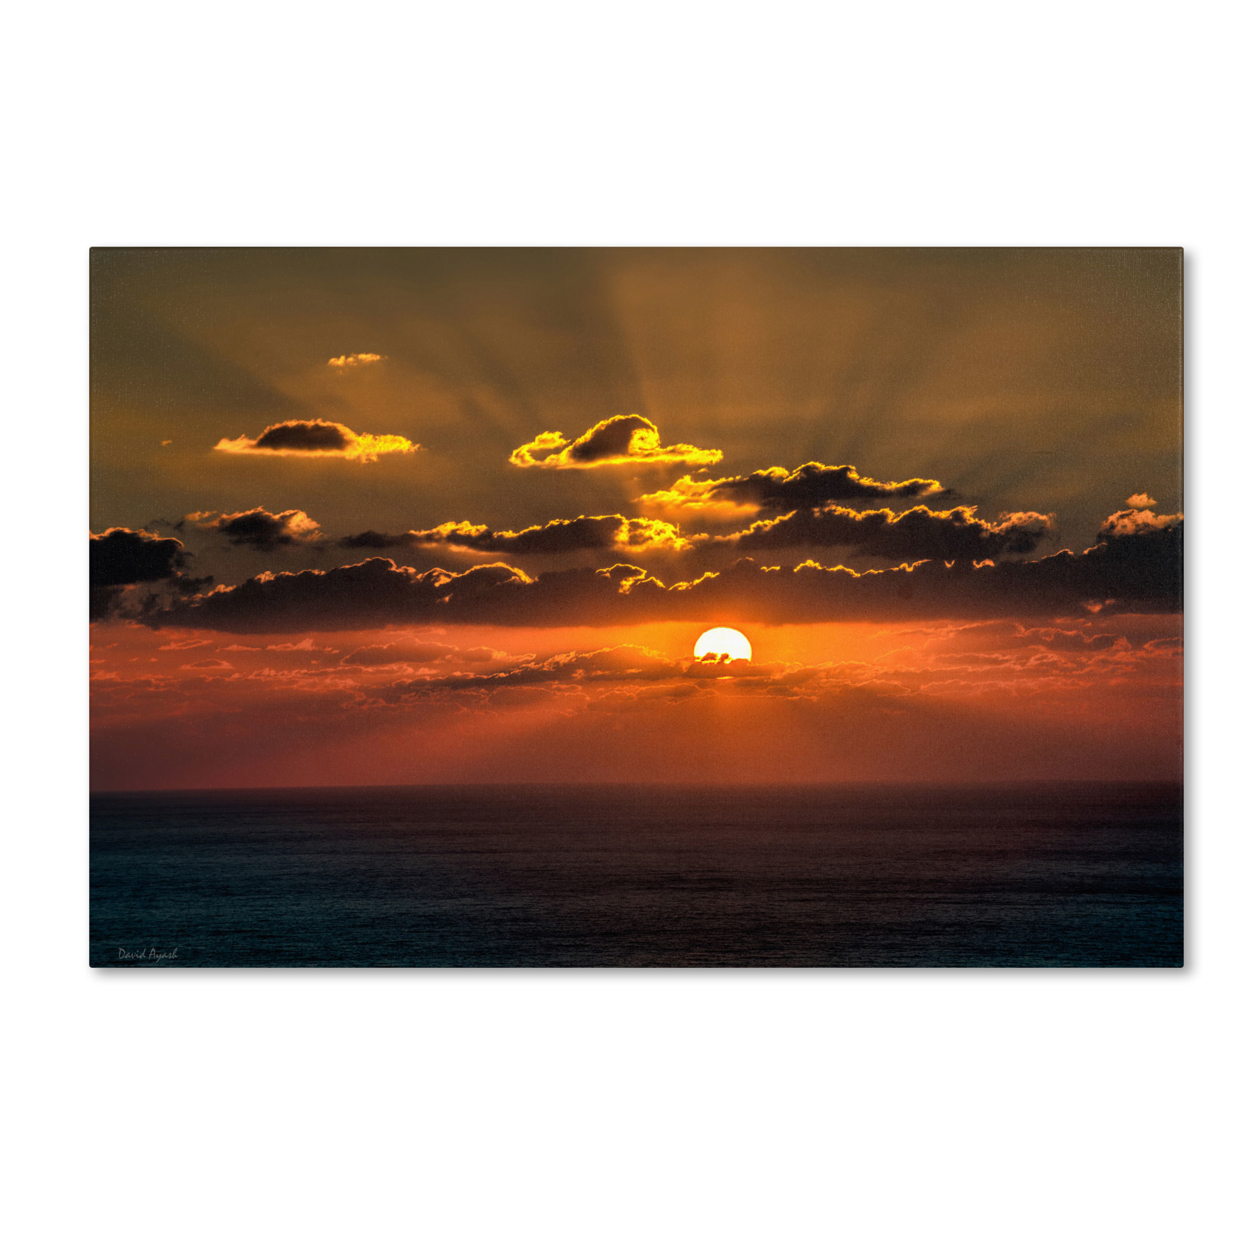 David Ayash 'Mediterranean Sunset' Canvas Art 16 X 24